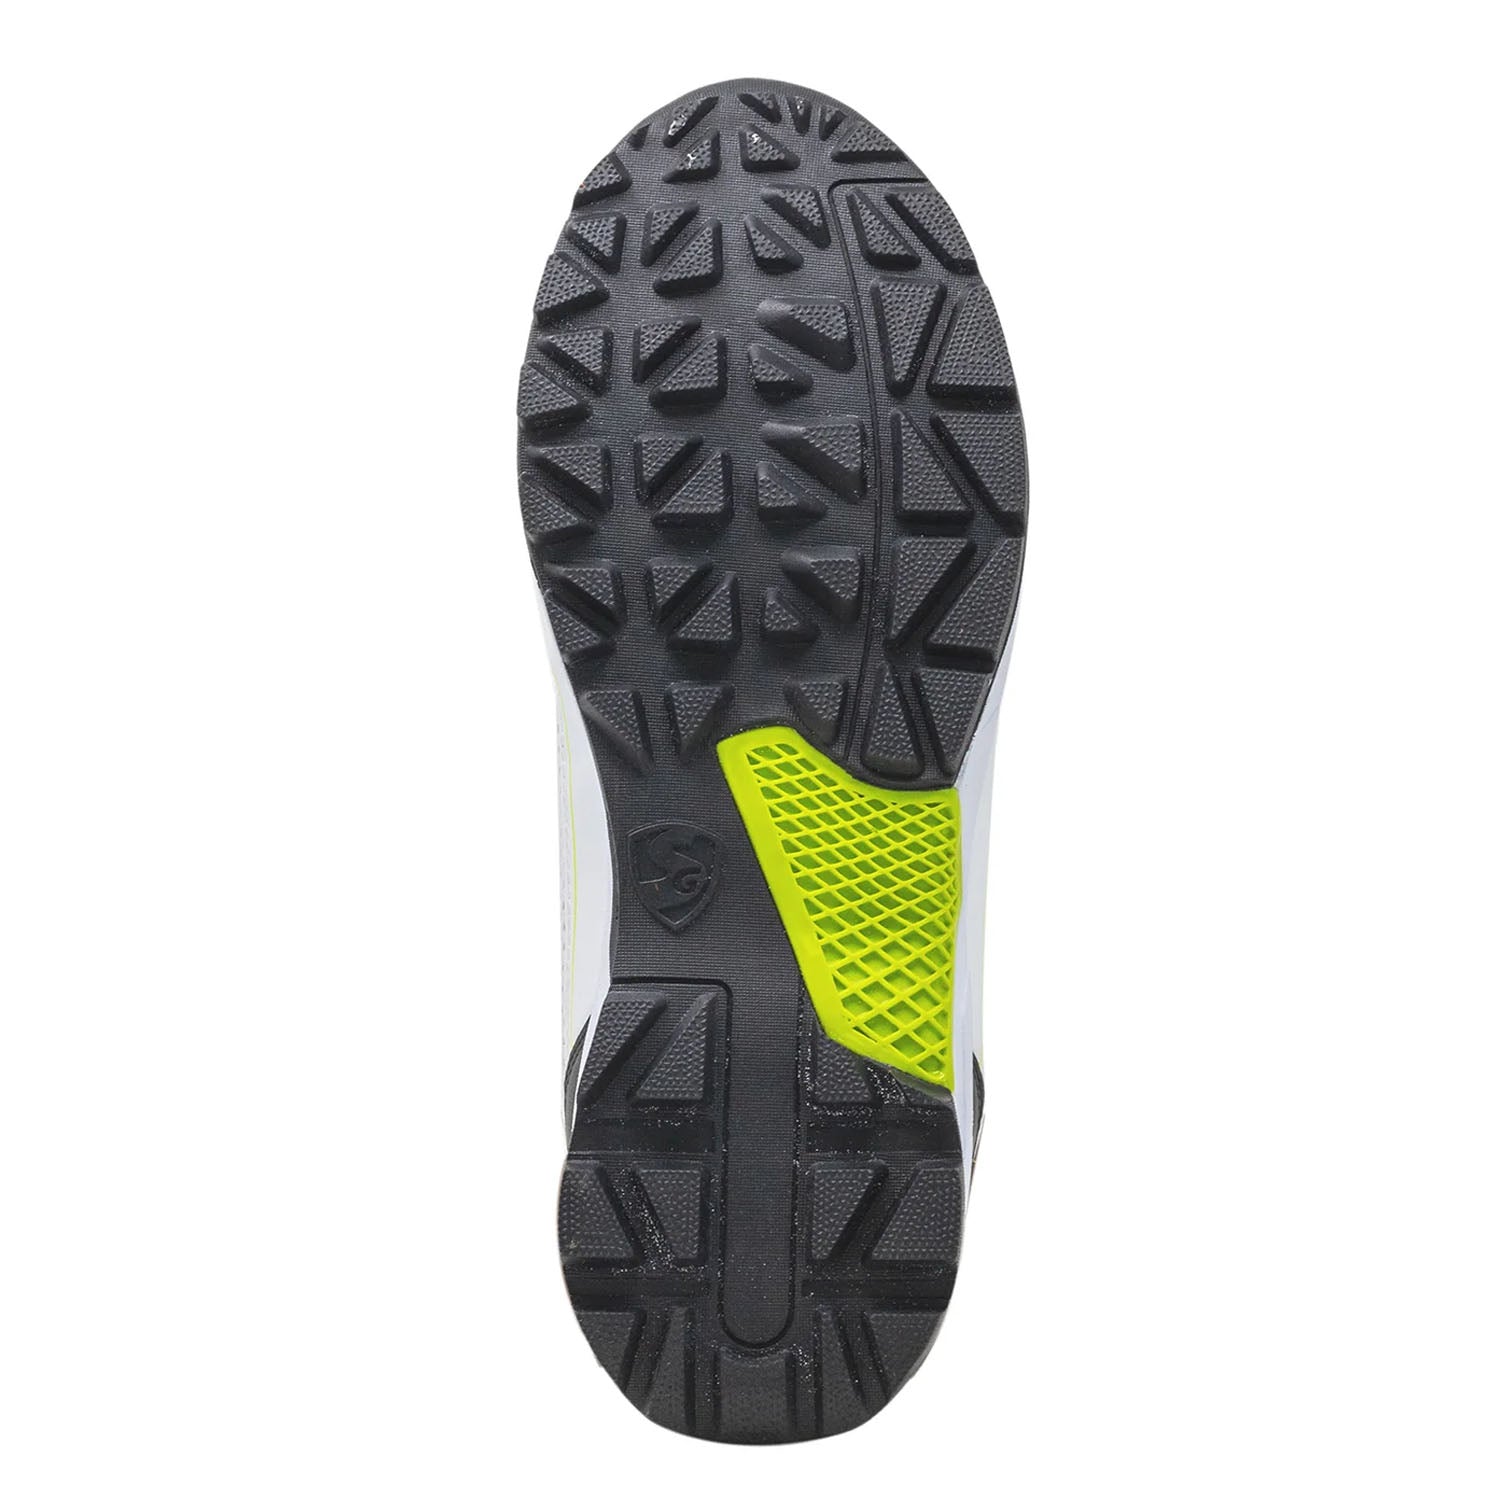 SG Scorer 6.0 Rubber Spikes Cricket Shoes - Best Price online Prokicksports.com